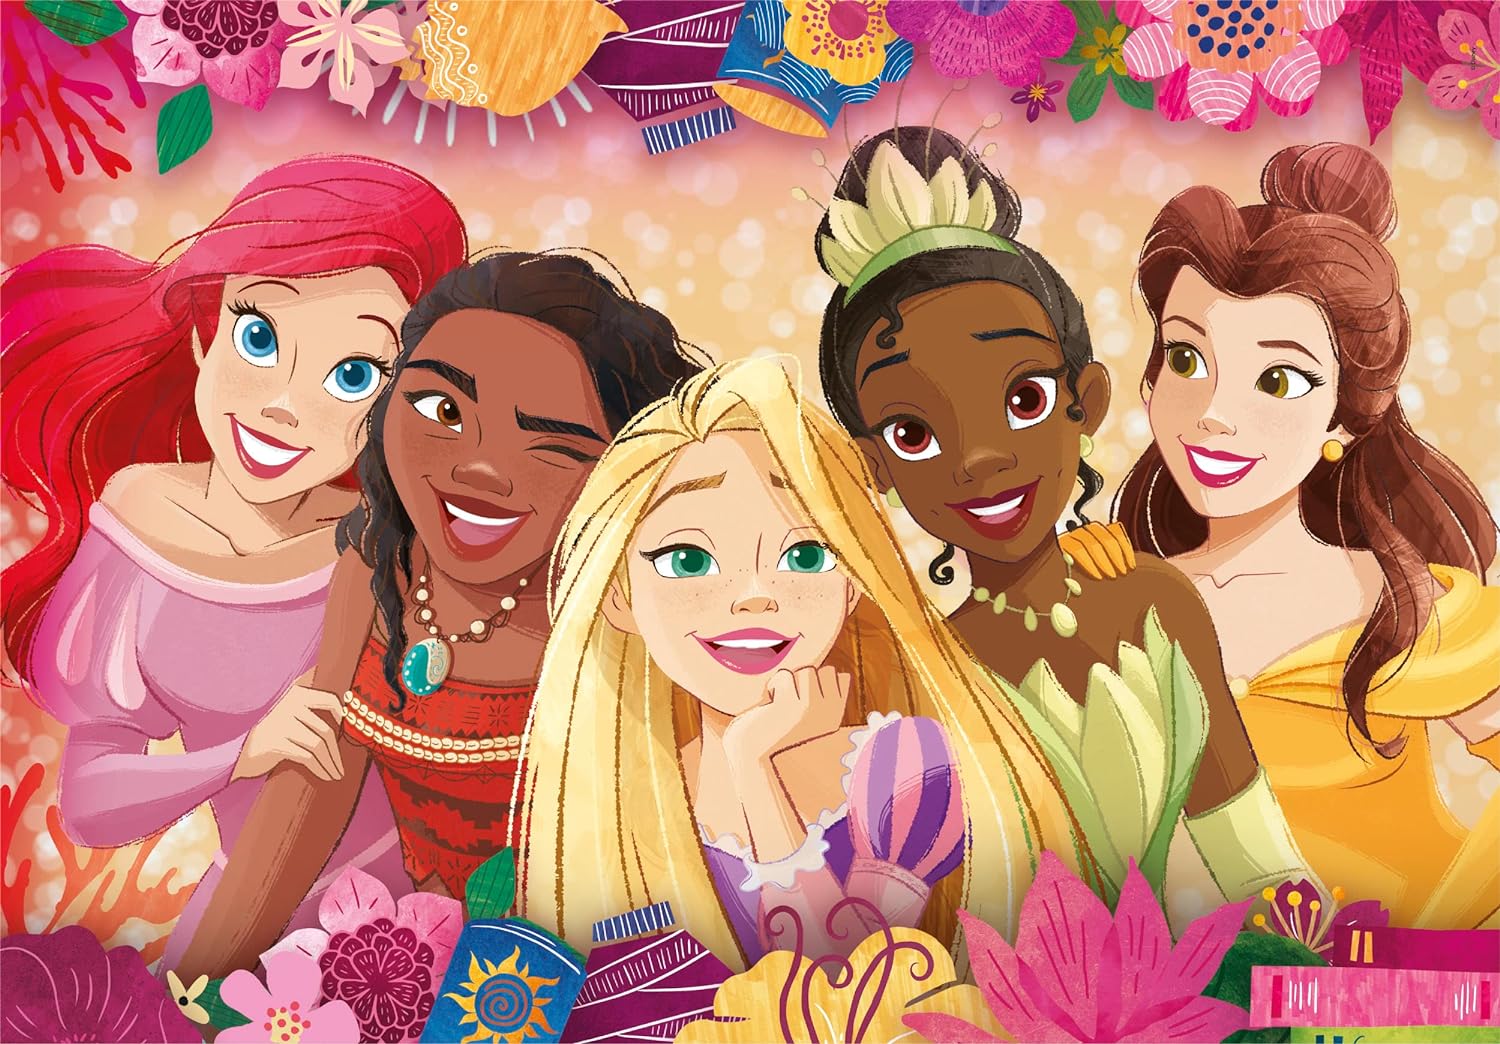 Puzzle Maxi 24 Piezas | Disney Princesas Clementoni